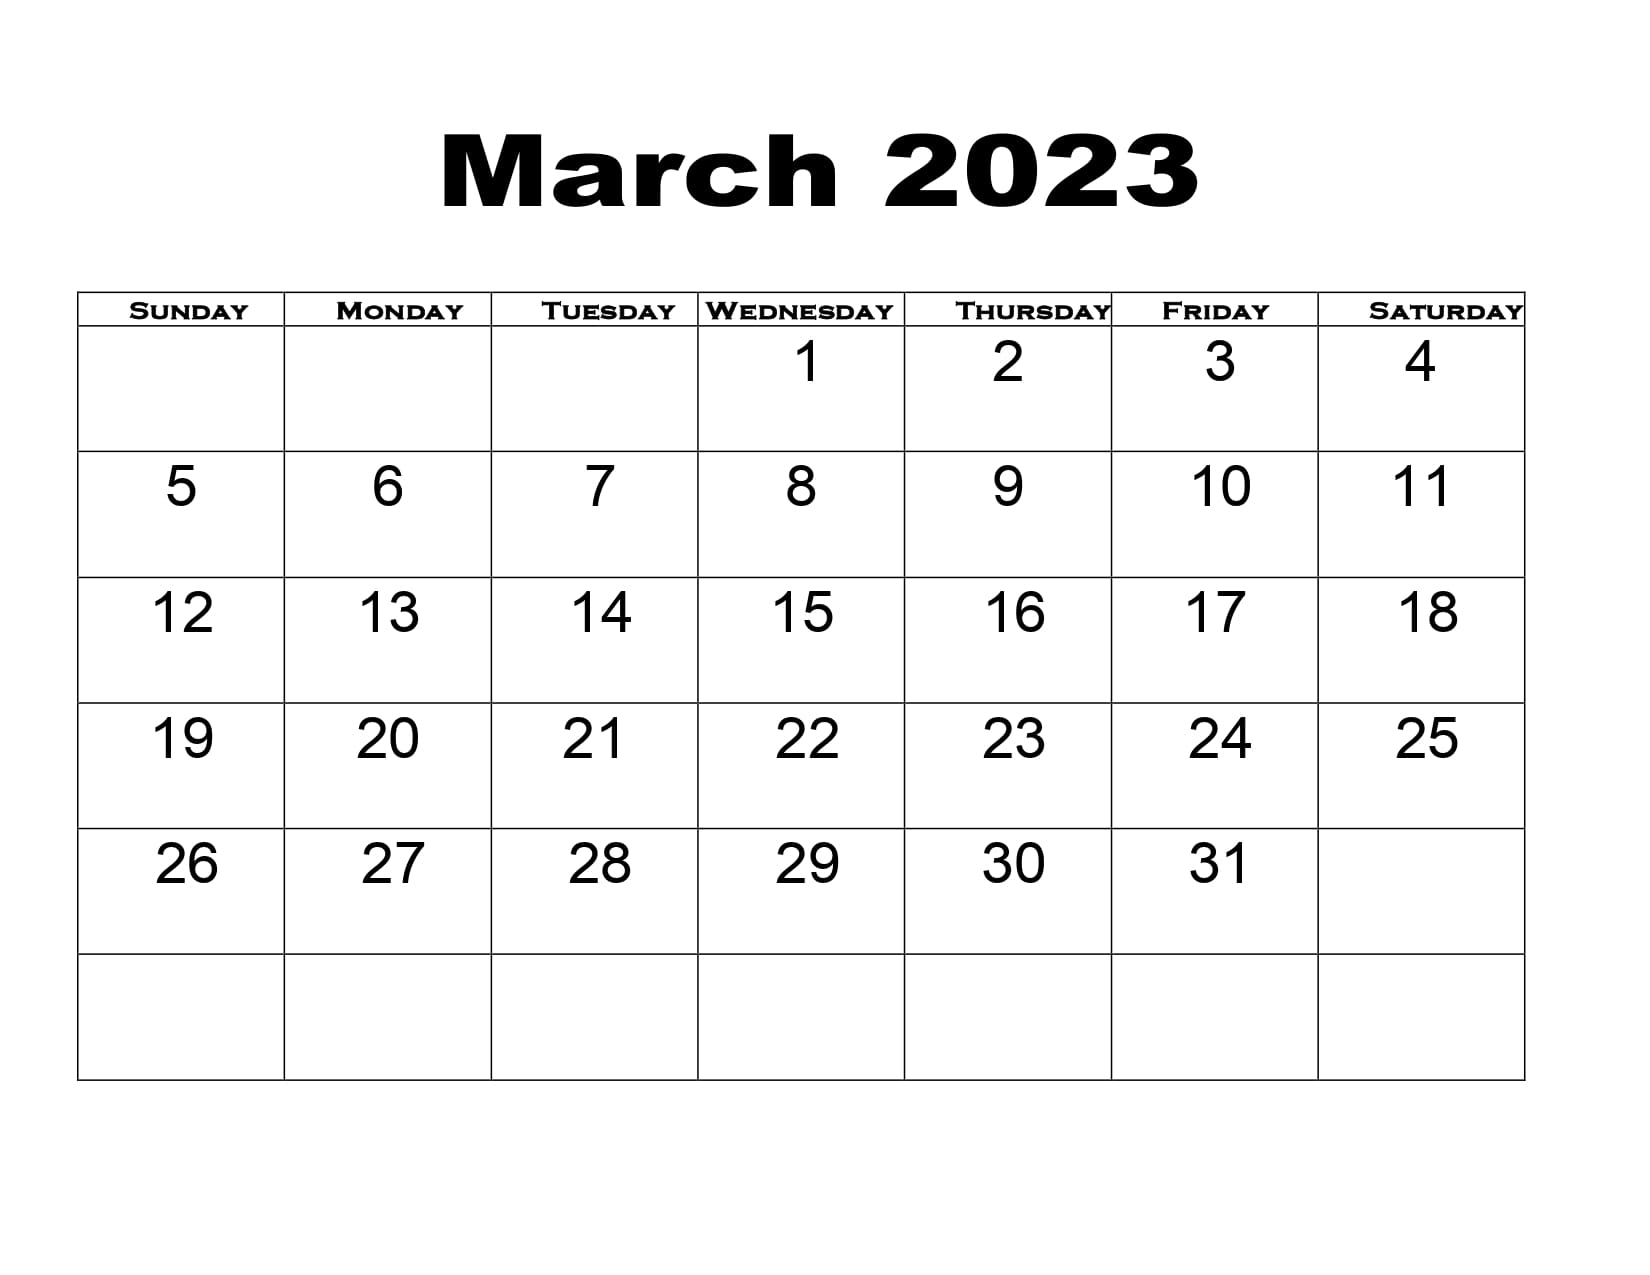 Simple March 2023 Calendar